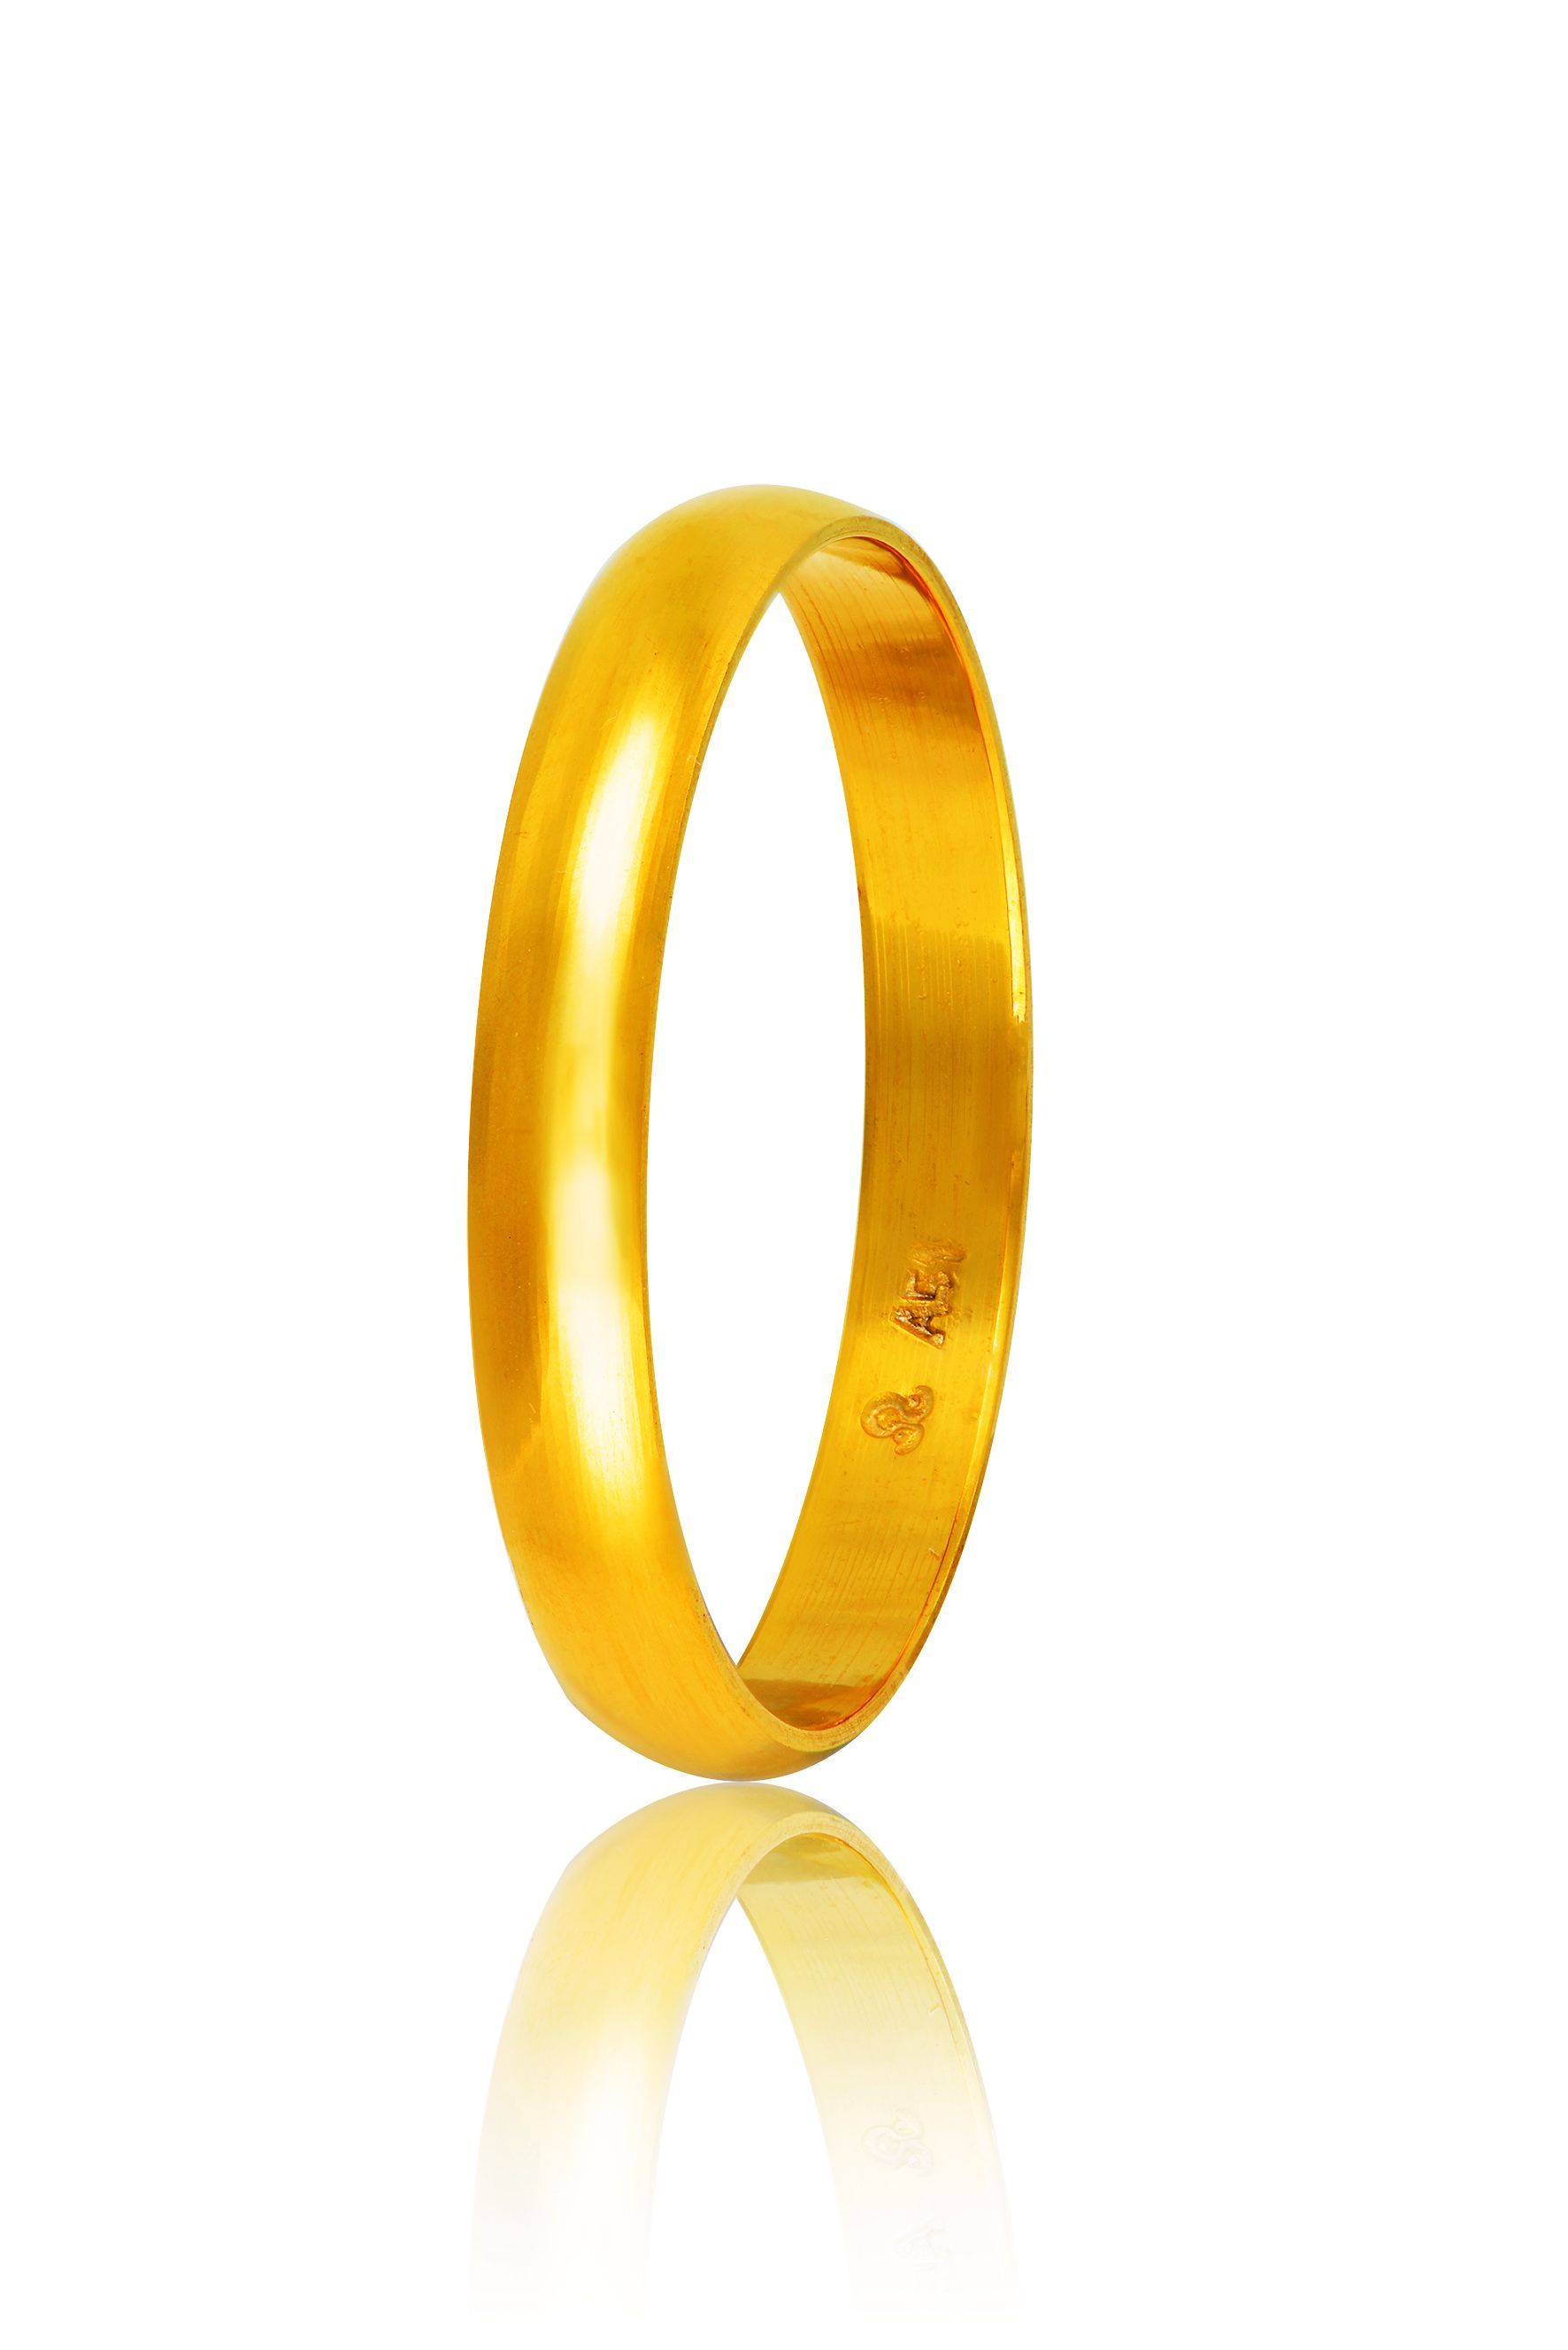 Golden wedding rings 3mm (code HR1Ay)